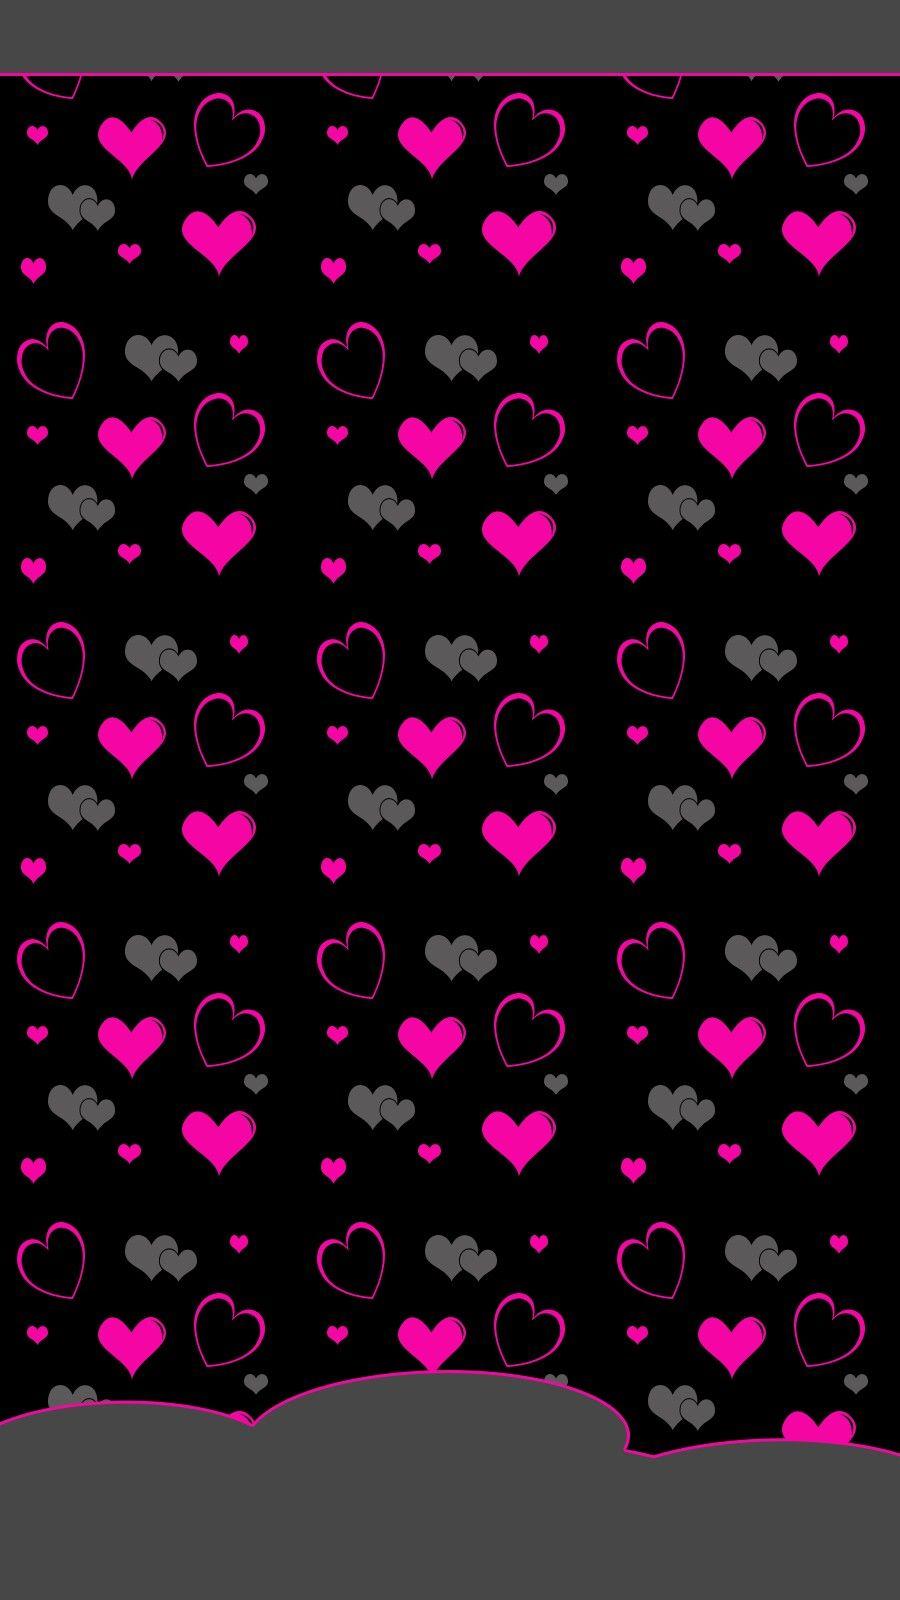 Pink and Black hearts. Wallpaper. Black heart